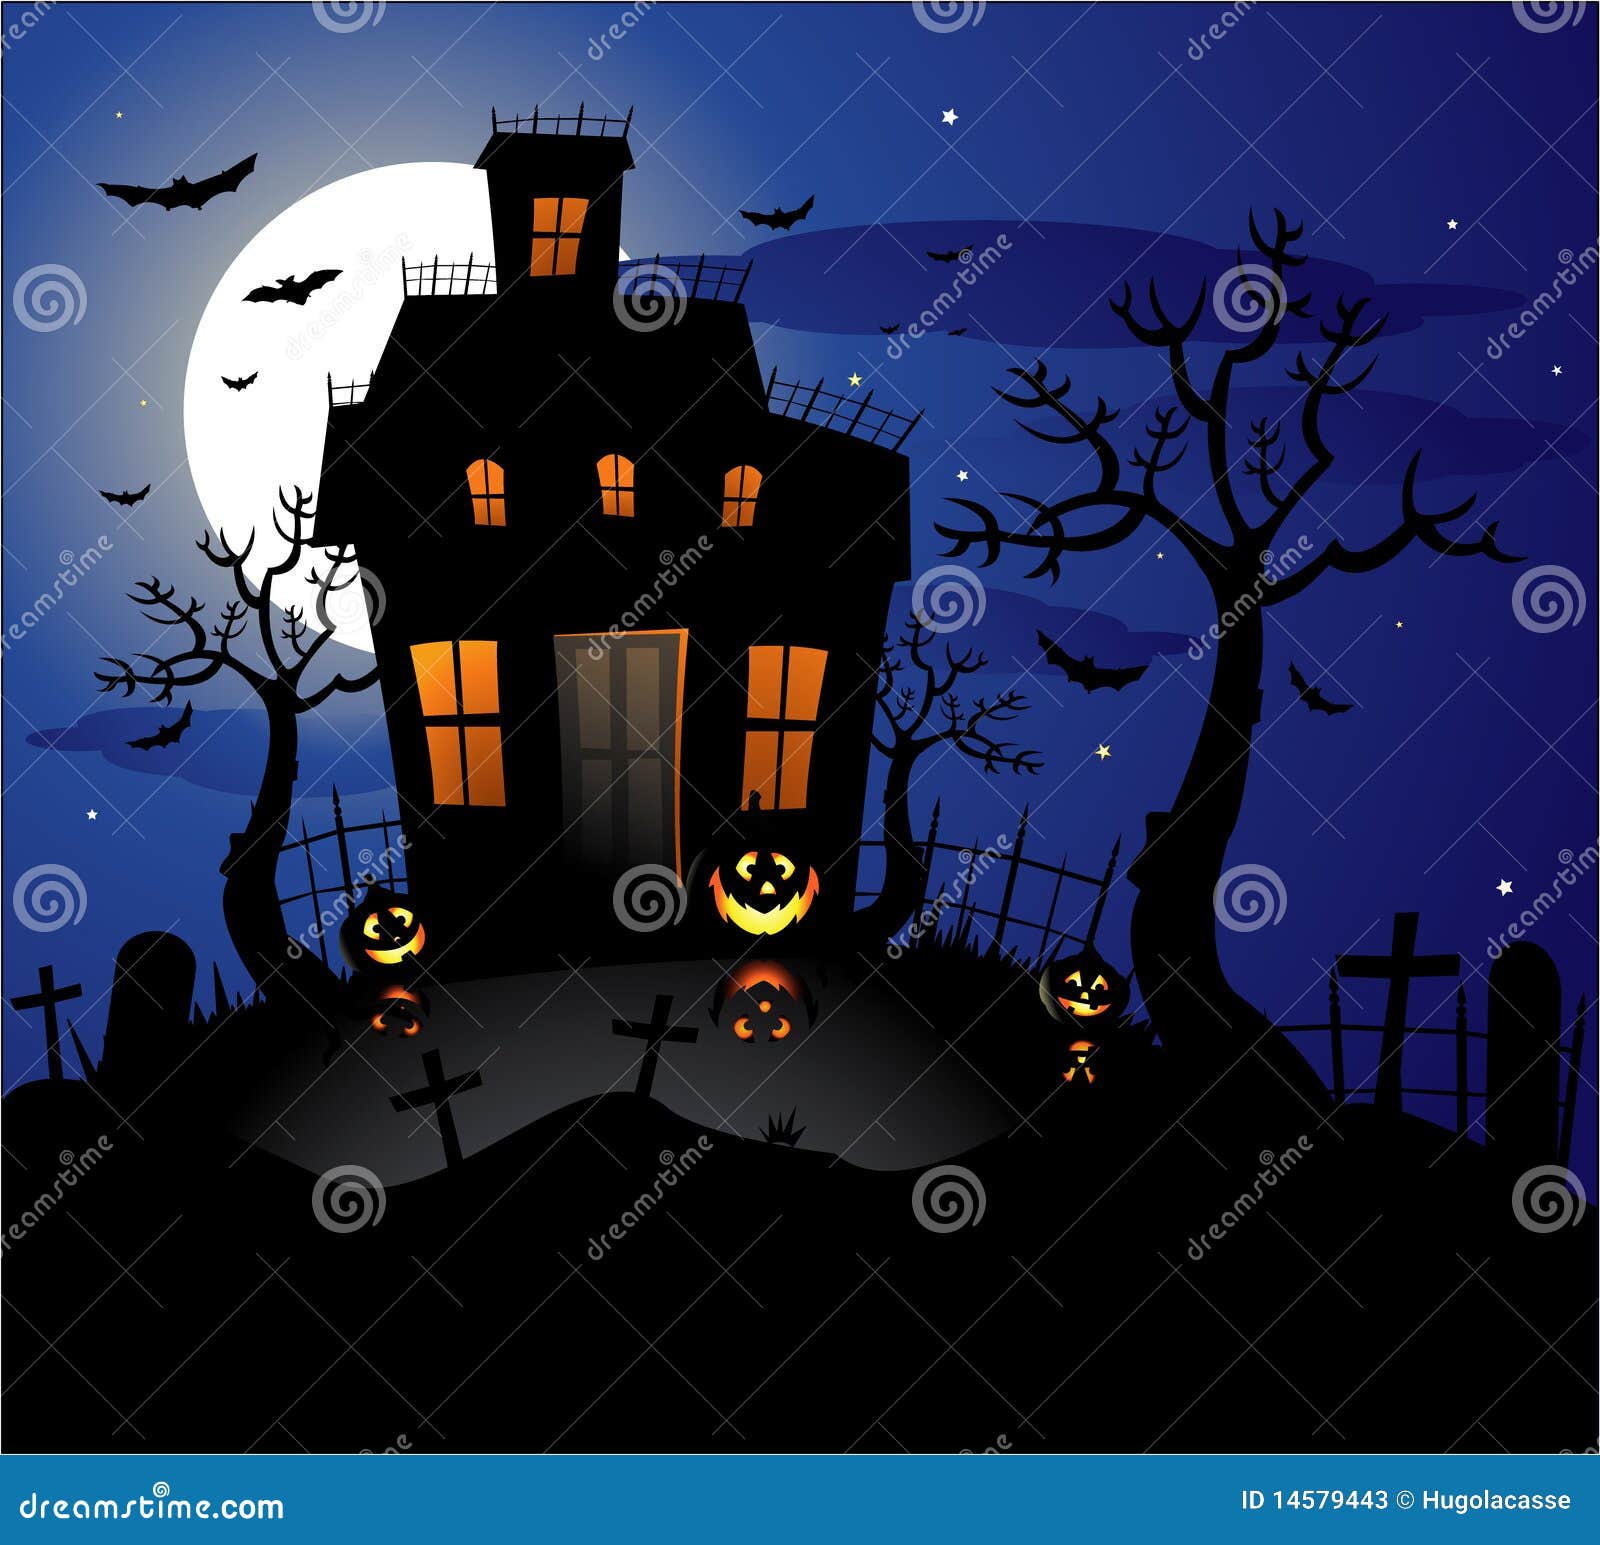 Haunted House Halloween Background Stock Vector - Illustration of ...